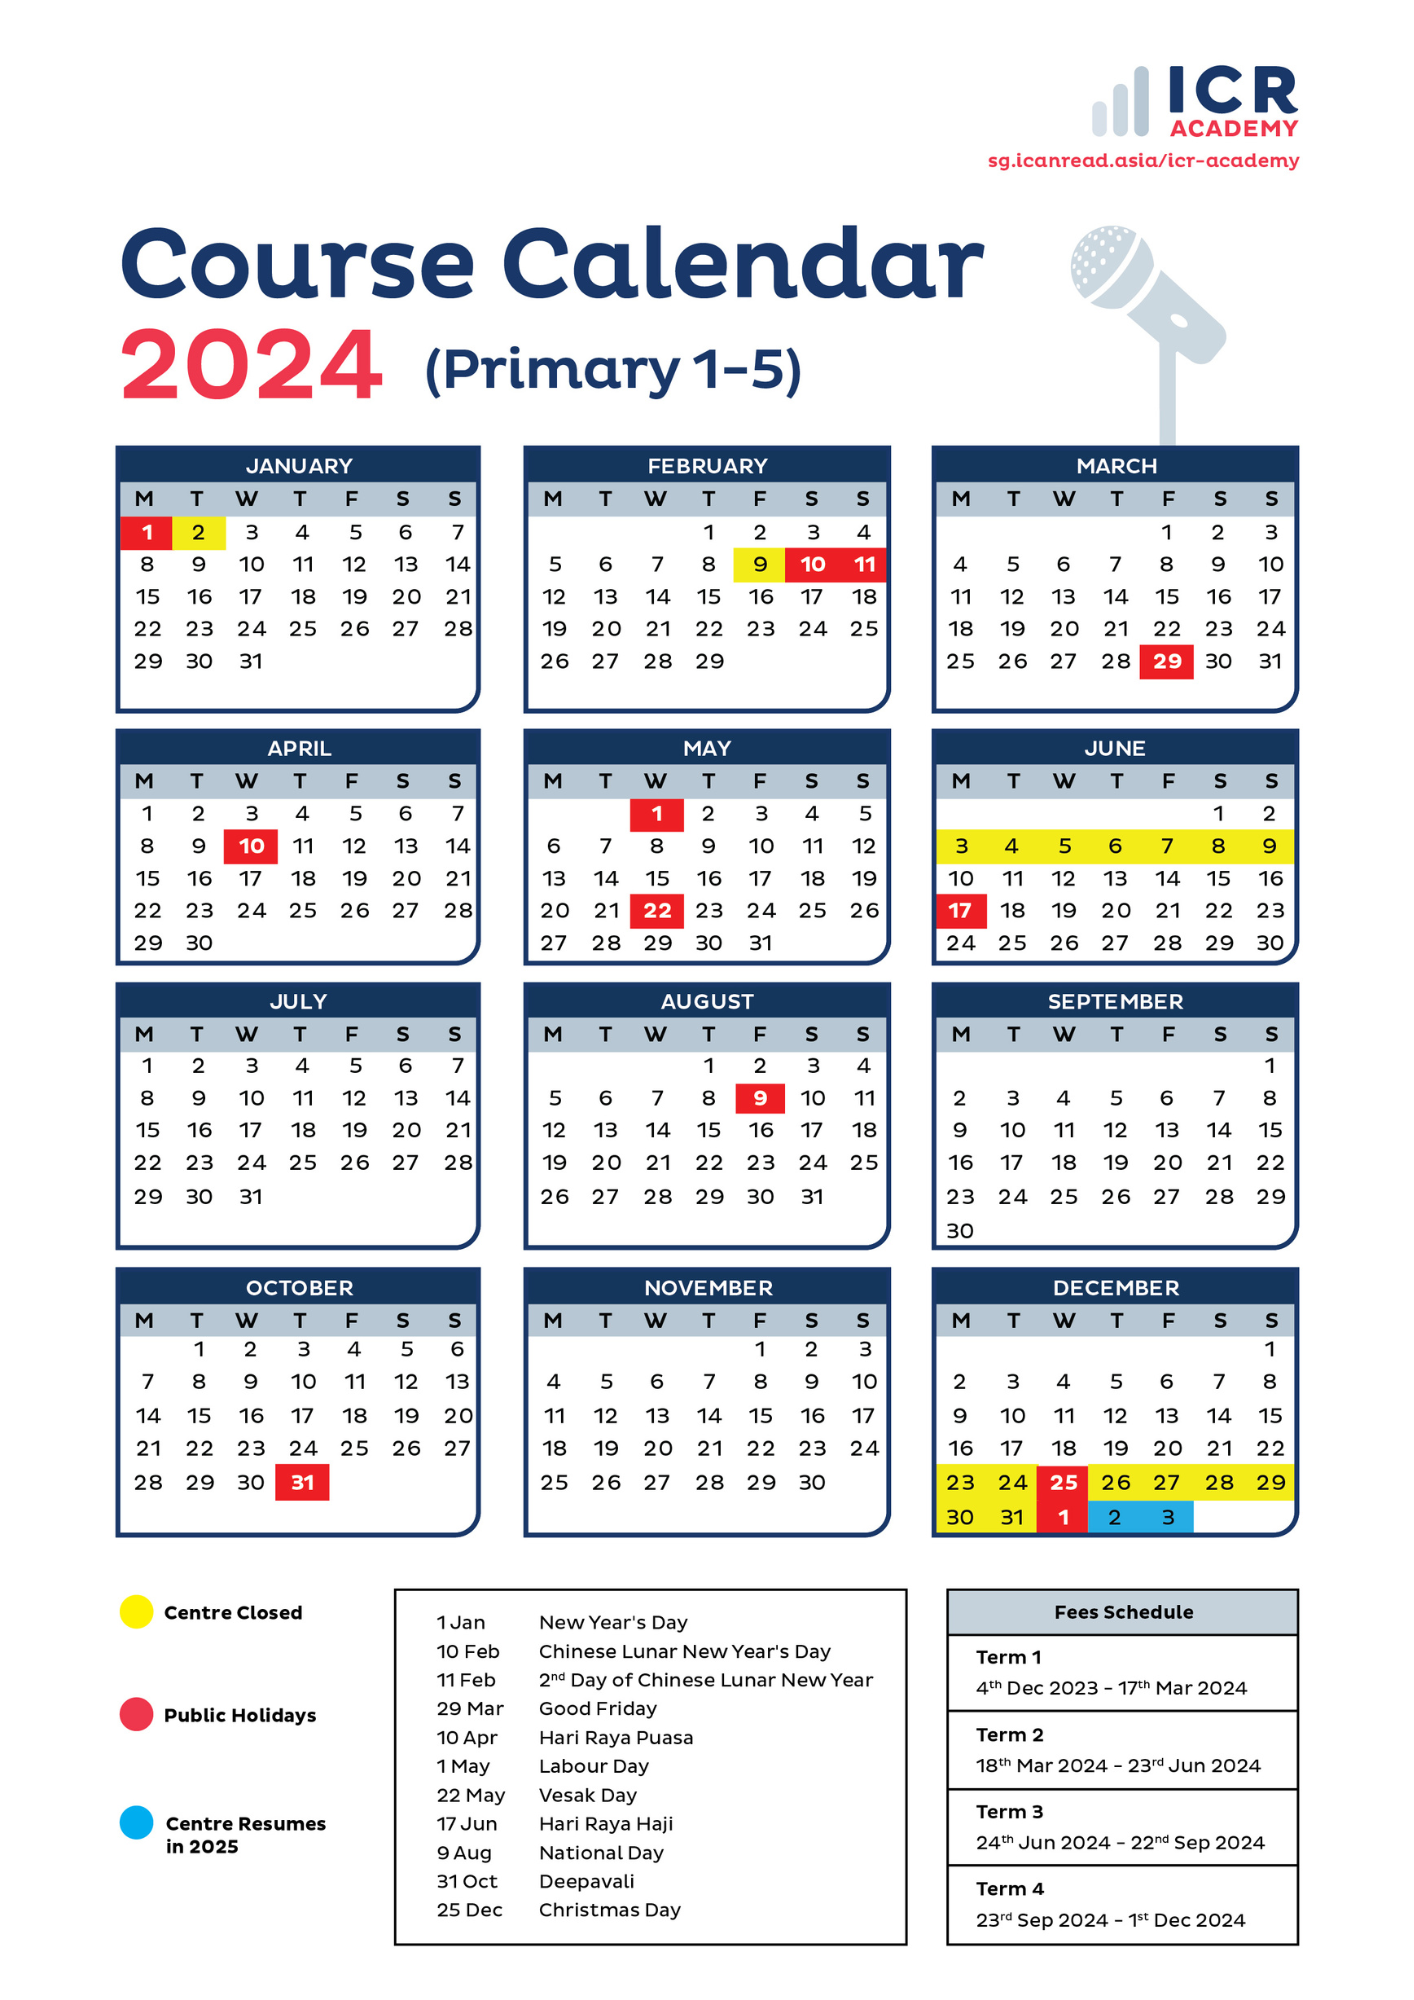 ICR Academy 2024 Course Calendar (Primary 1-5)